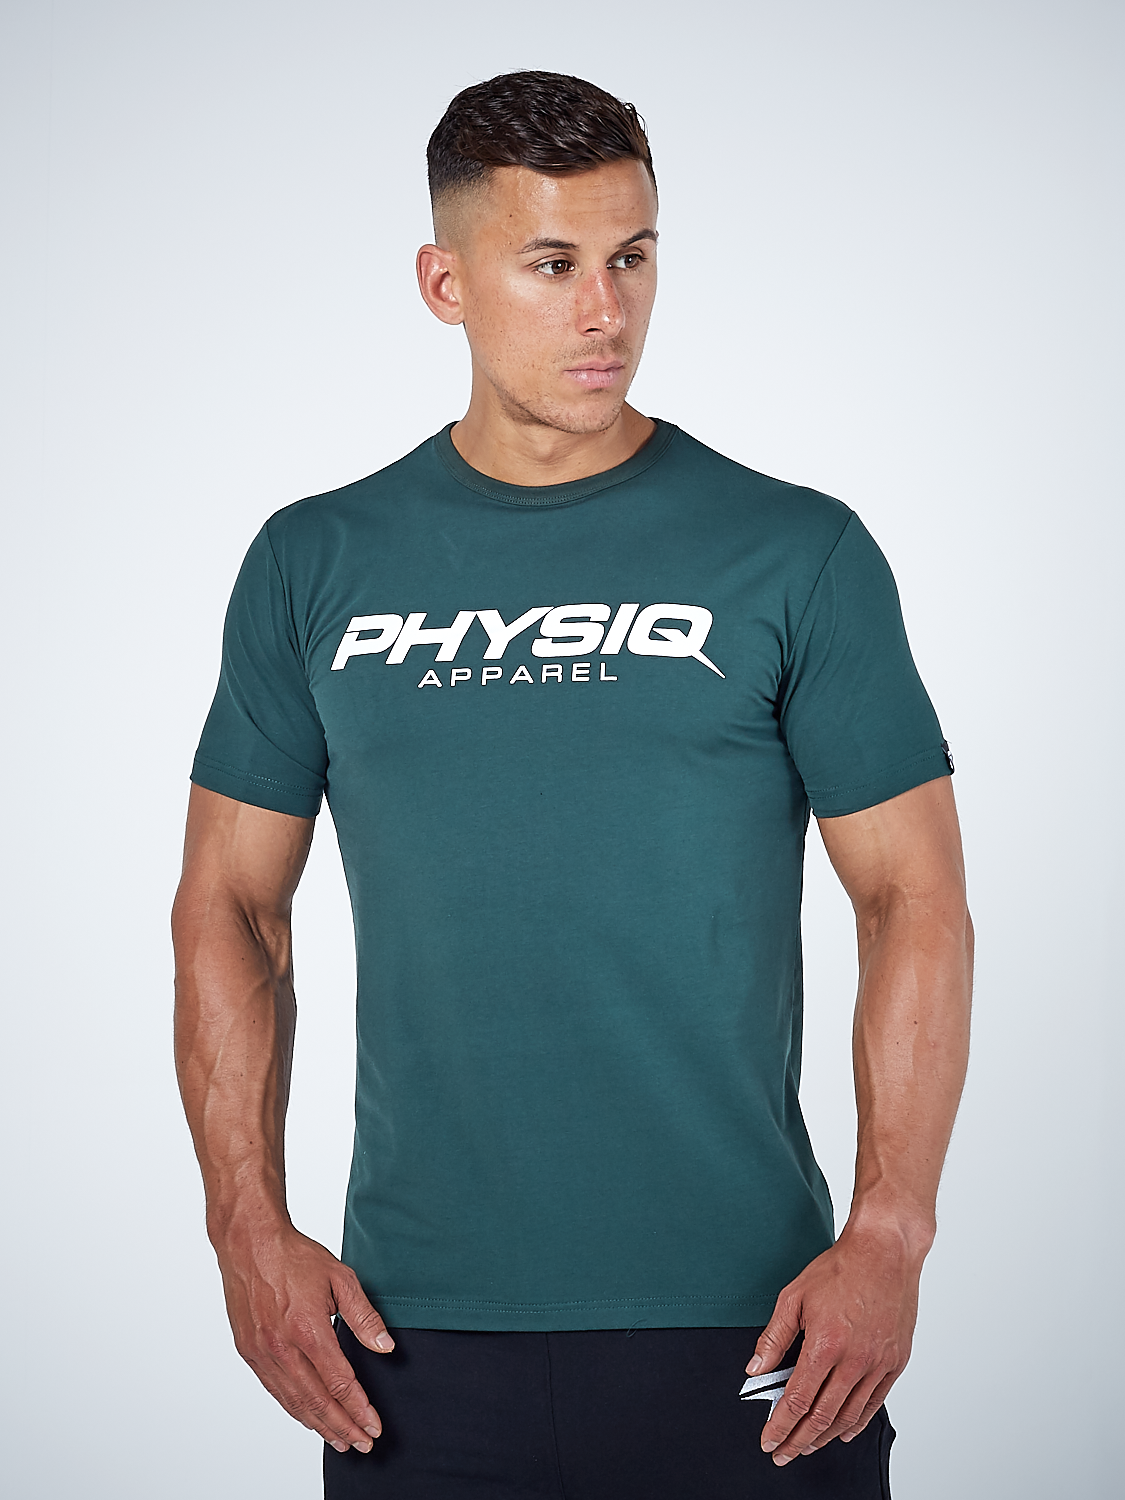 PHYSIQ APPAREL Supreme Short Sleeve Top Men's Tee T-Shirt Racing Green - Activemen Clothing